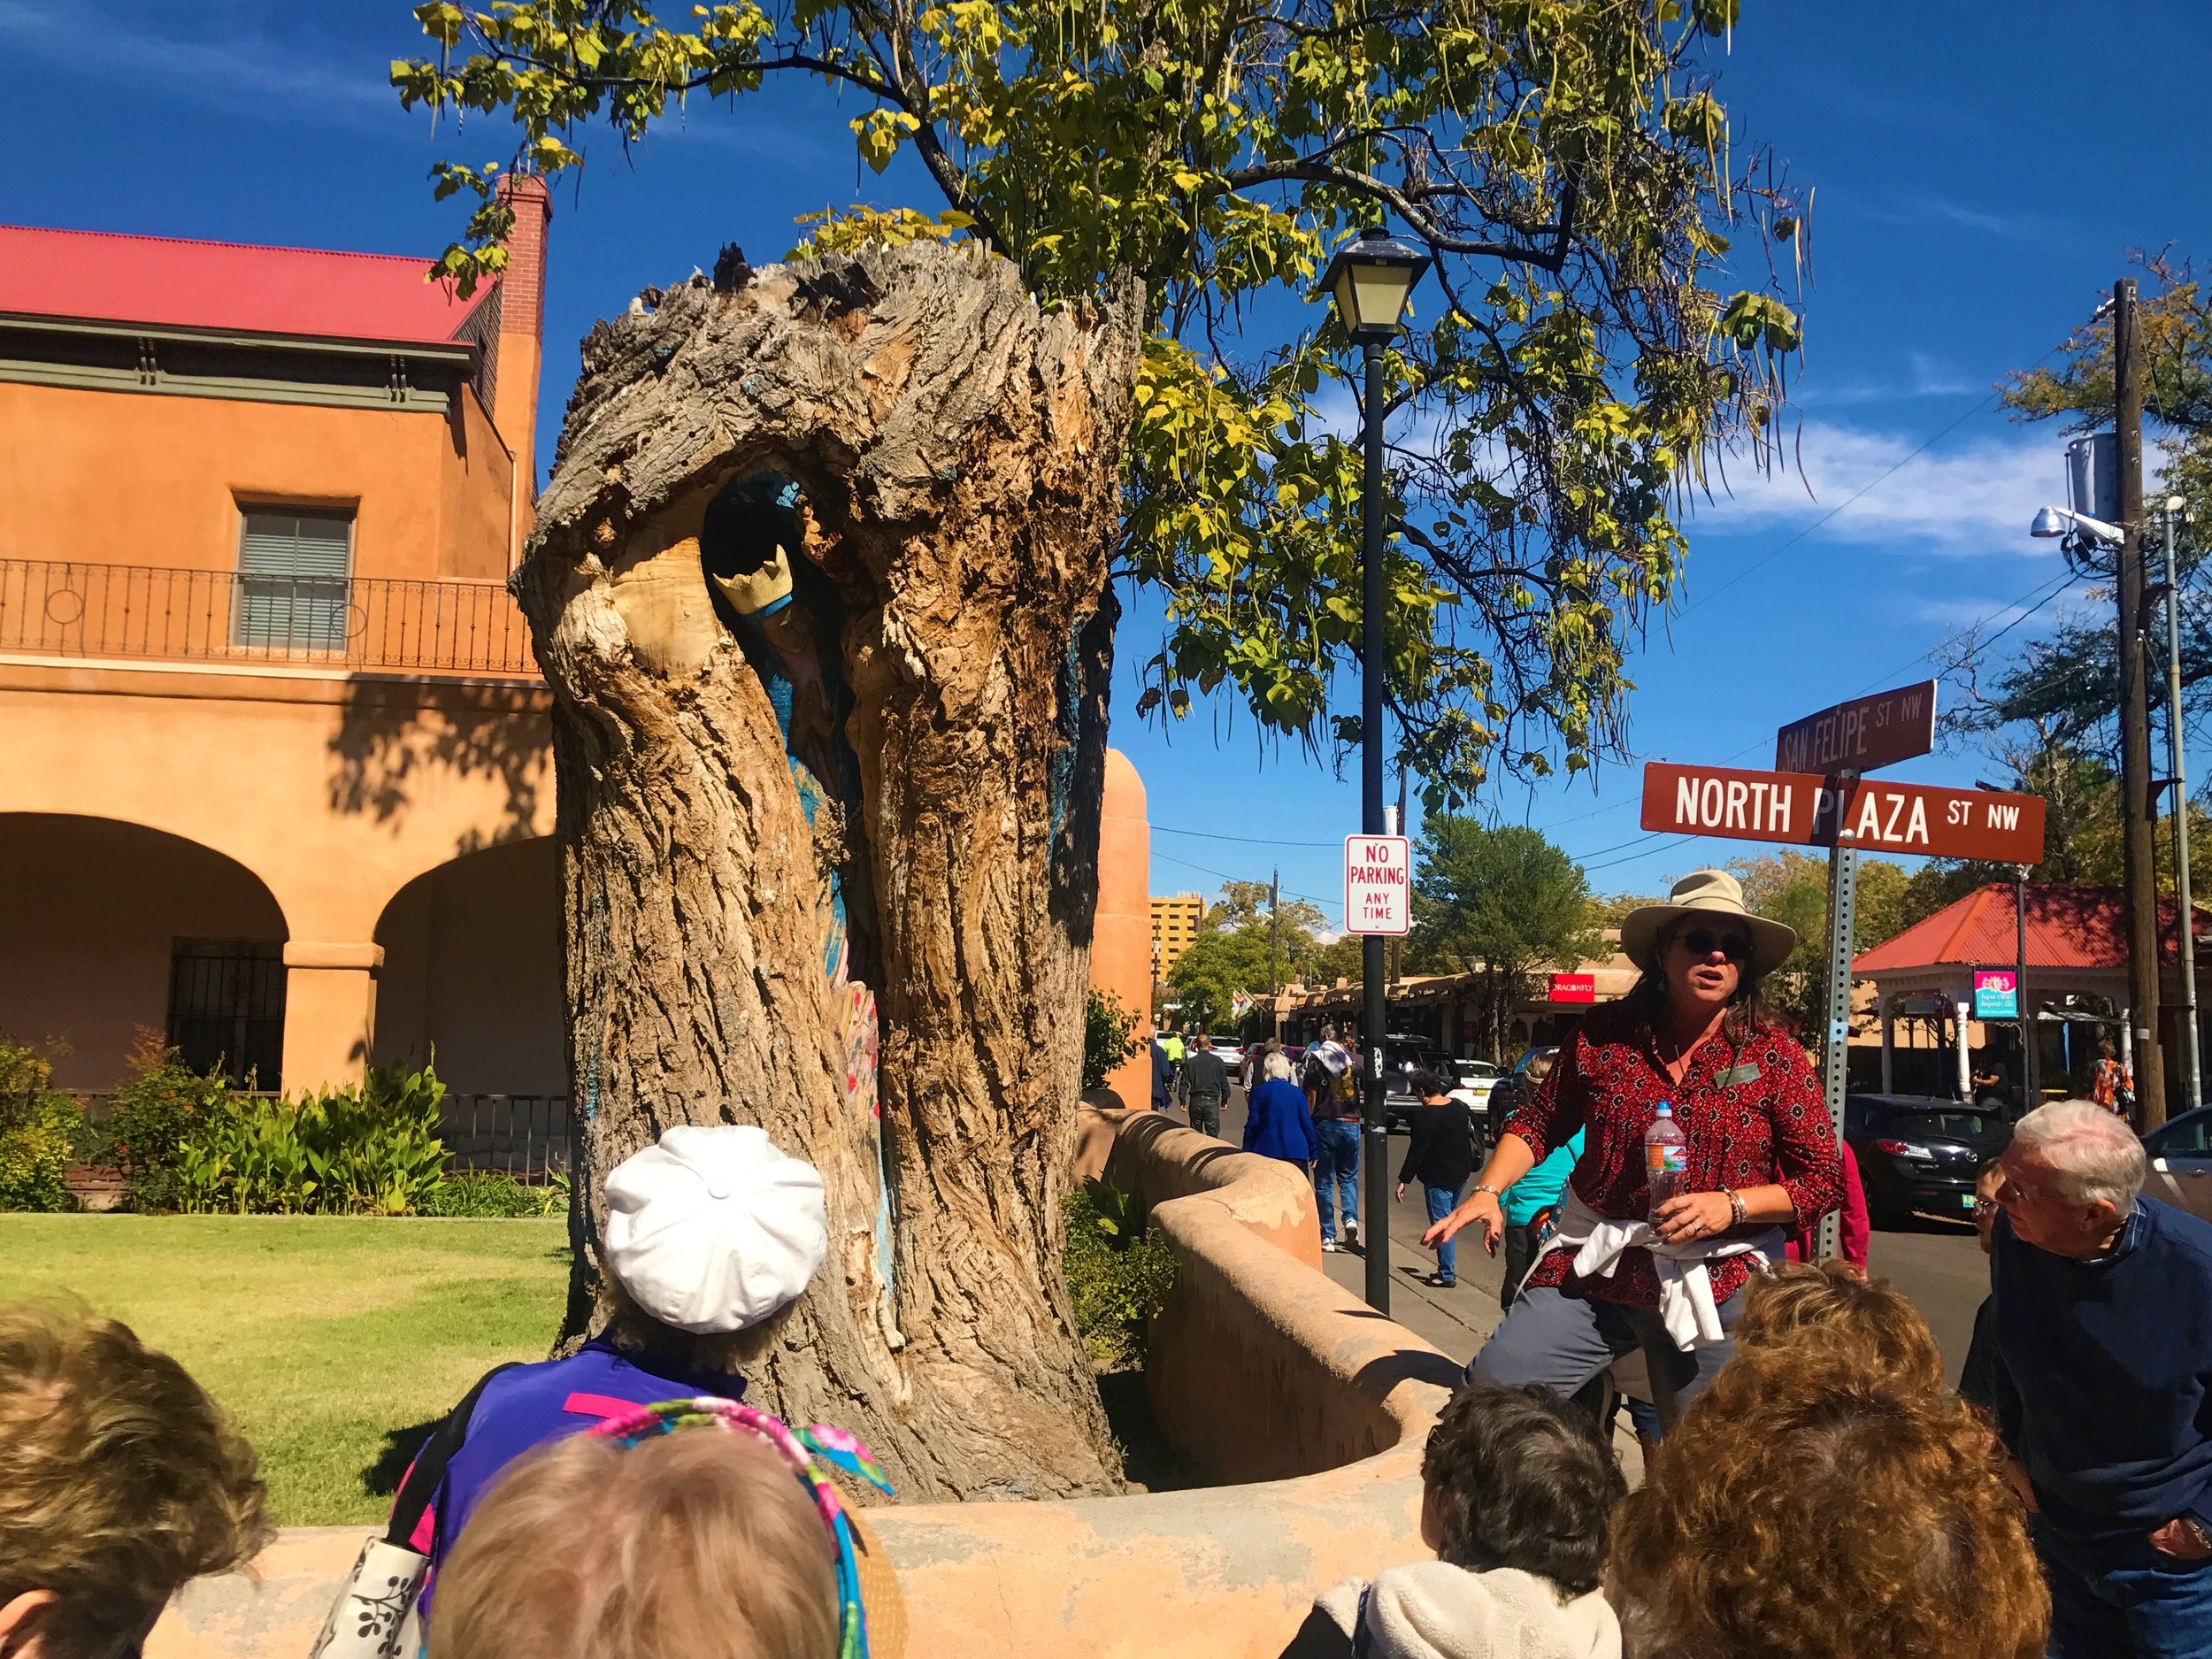 Our local guide Tam showing us around Albuquerque